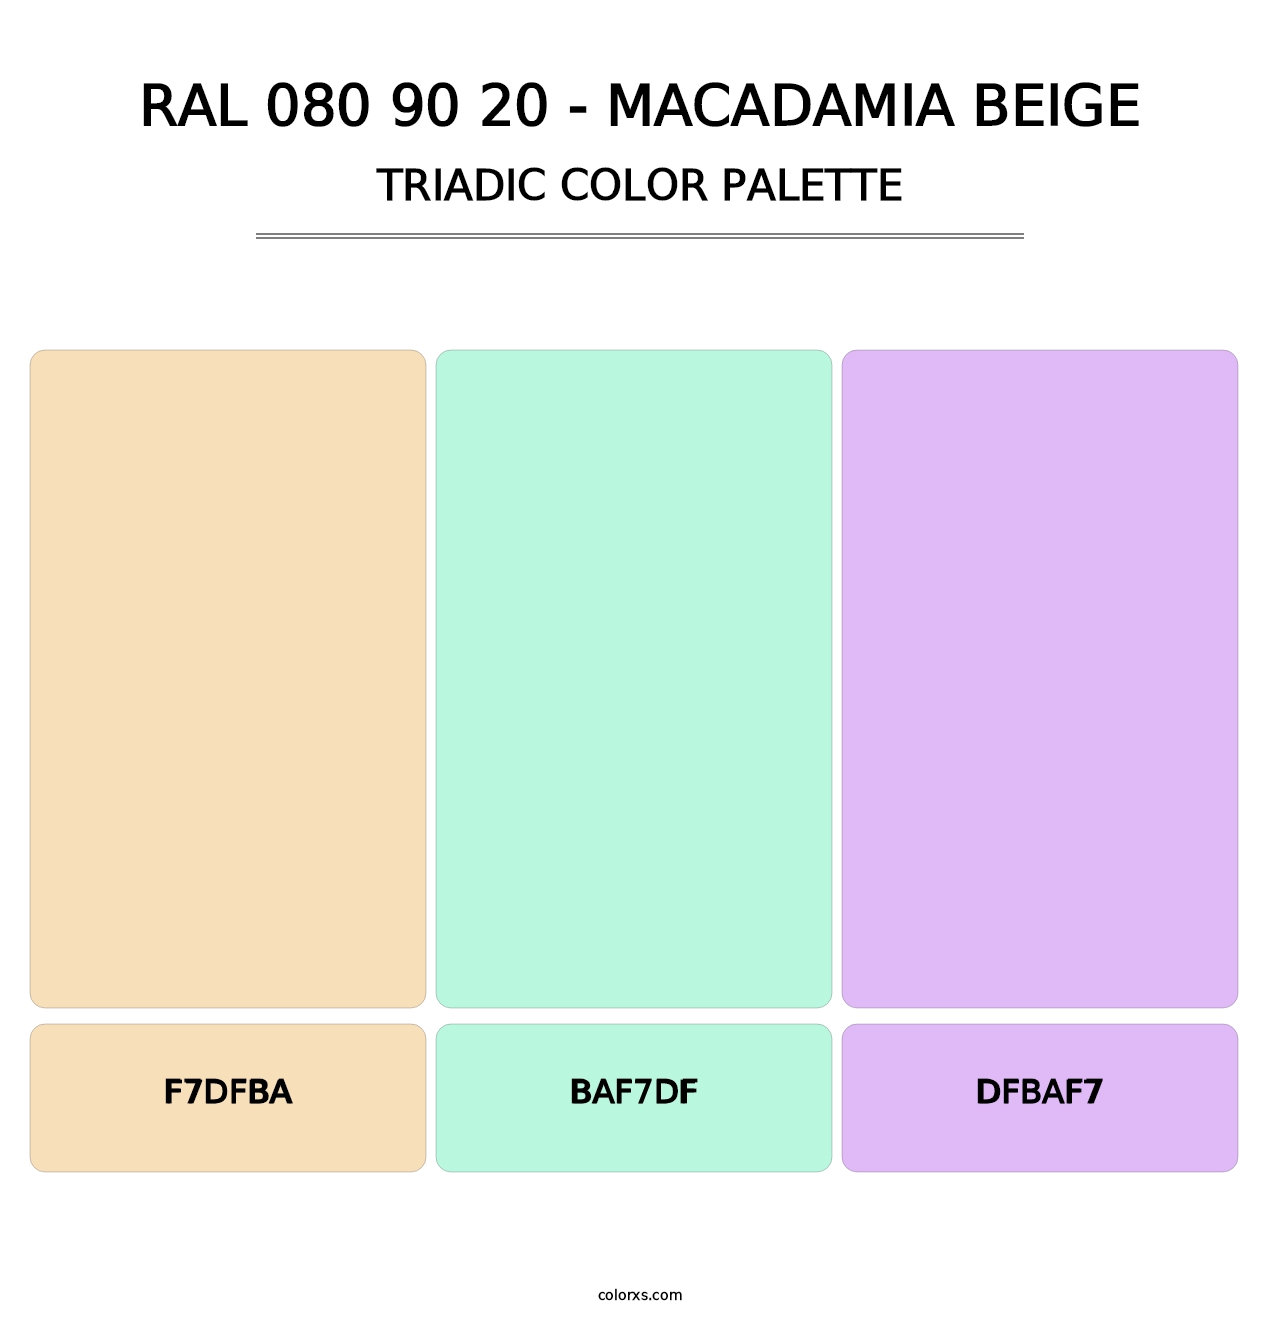 RAL 080 90 20 - Macadamia Beige - Triadic Color Palette